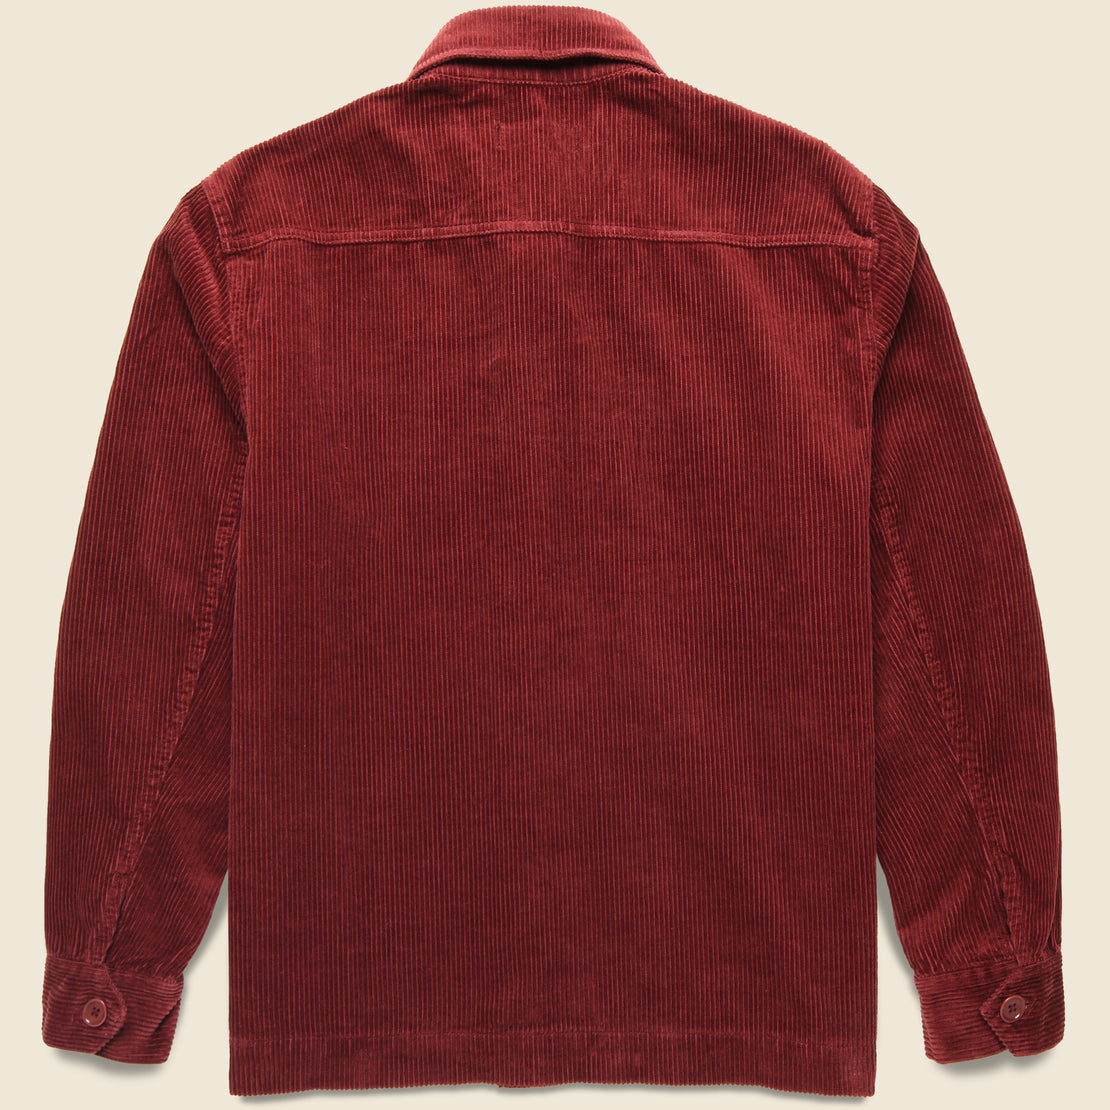 Corduroy Work Jacket - Dark Currant - Alex Mill - STAG Provisions - Outerwear - Coat / Jacket